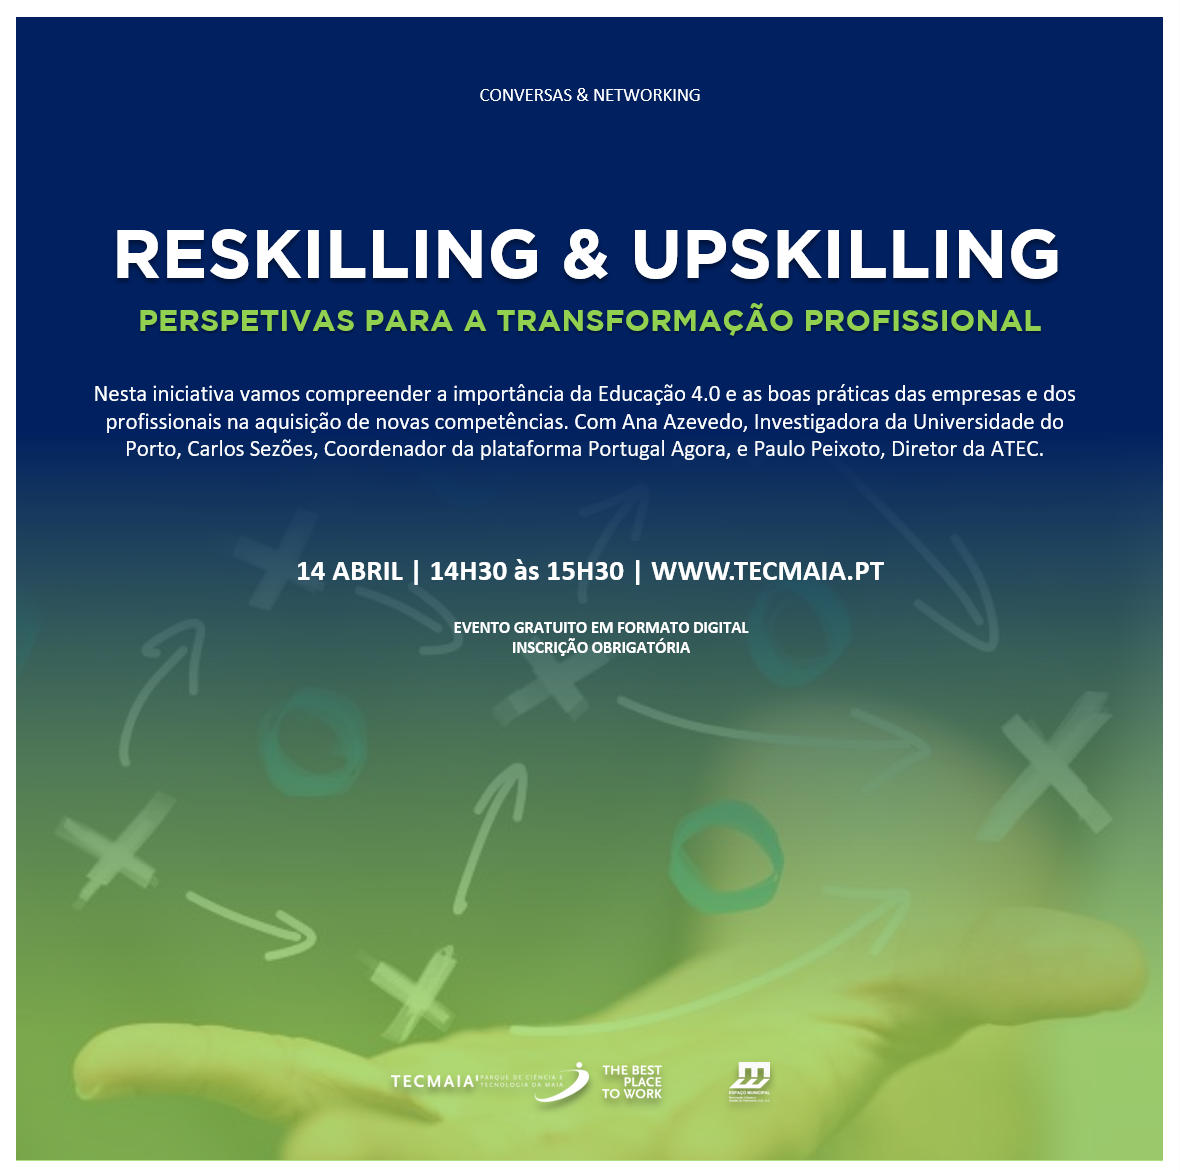 Reskilling & Upskilling - Perspetivas para a transformação profissional